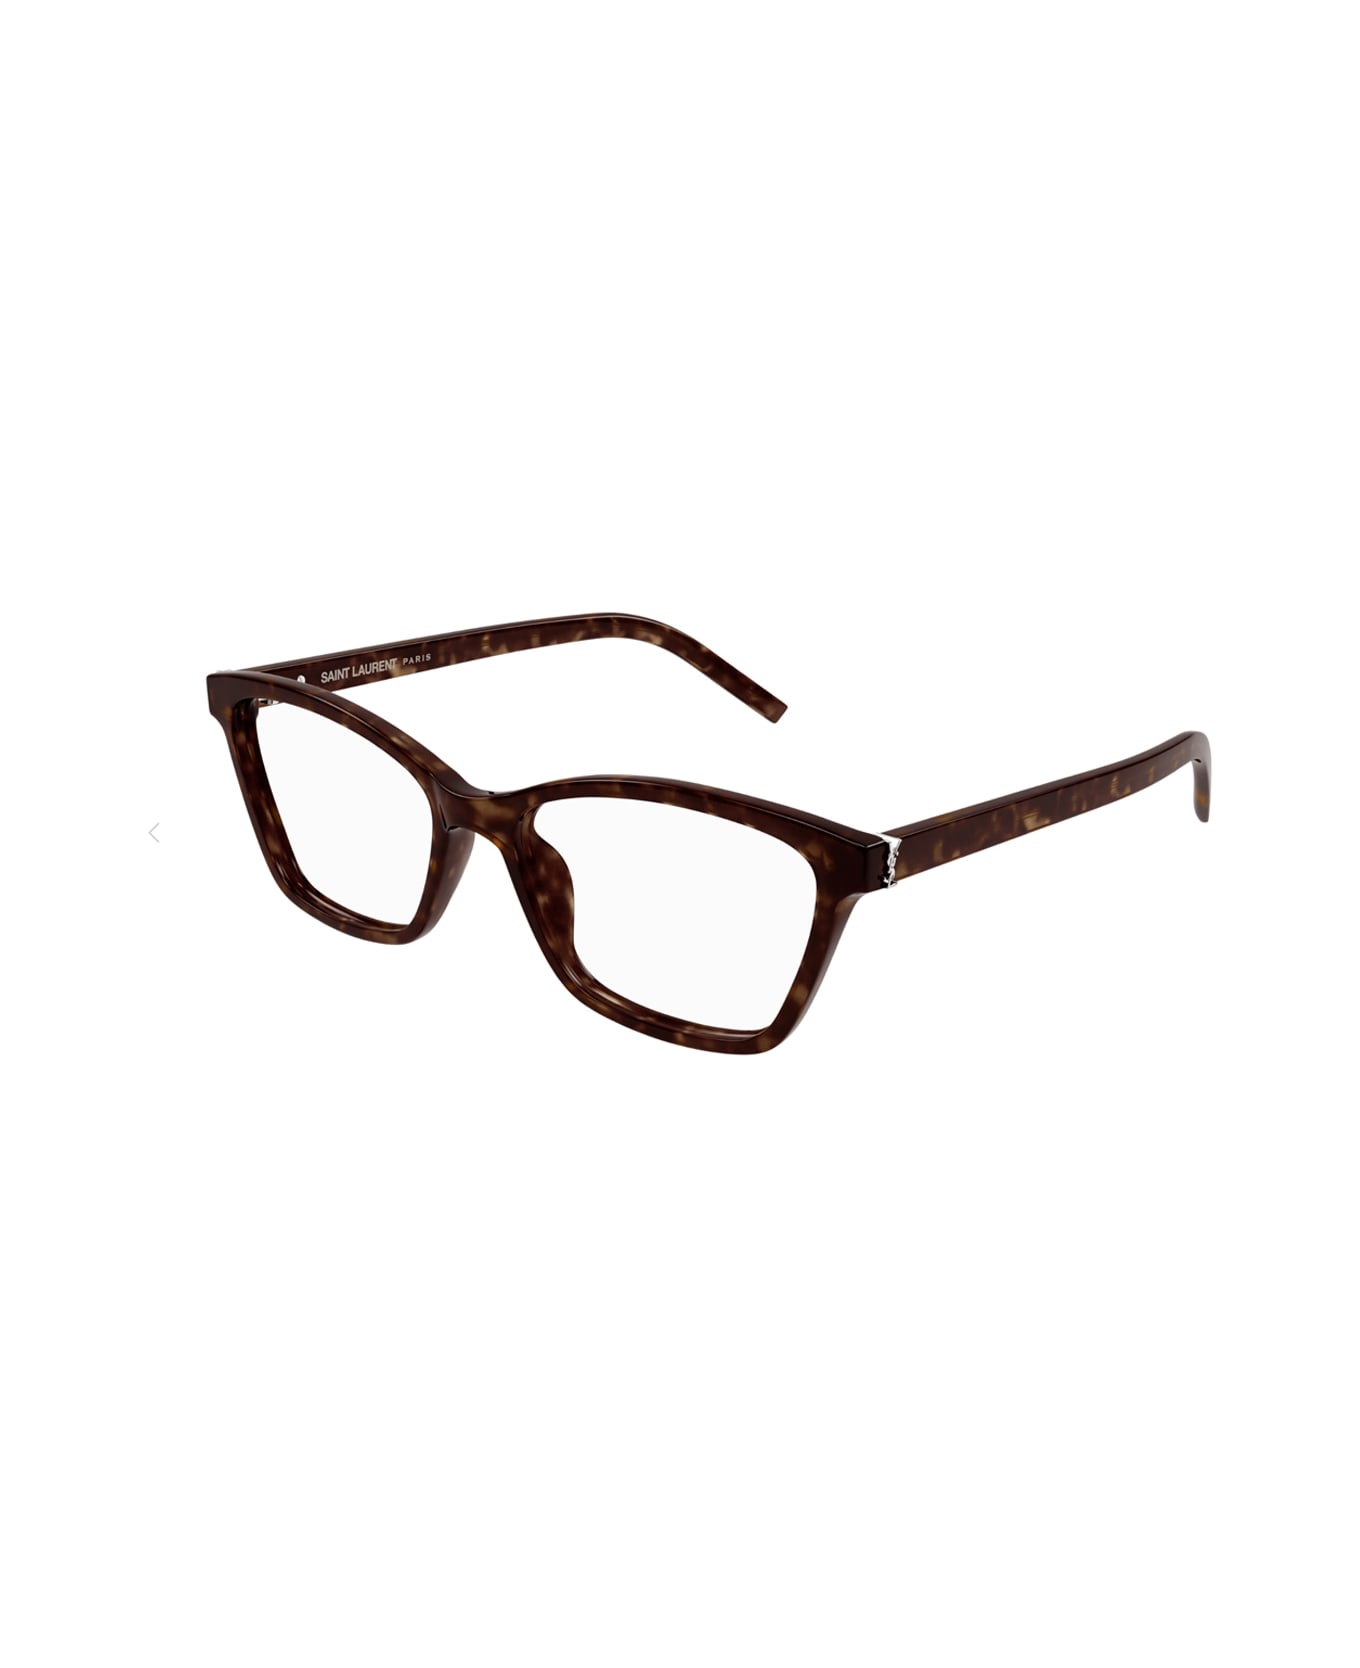 Saint Laurent Eyewear Sl M128 006 Glasses - Marrone アイウェア